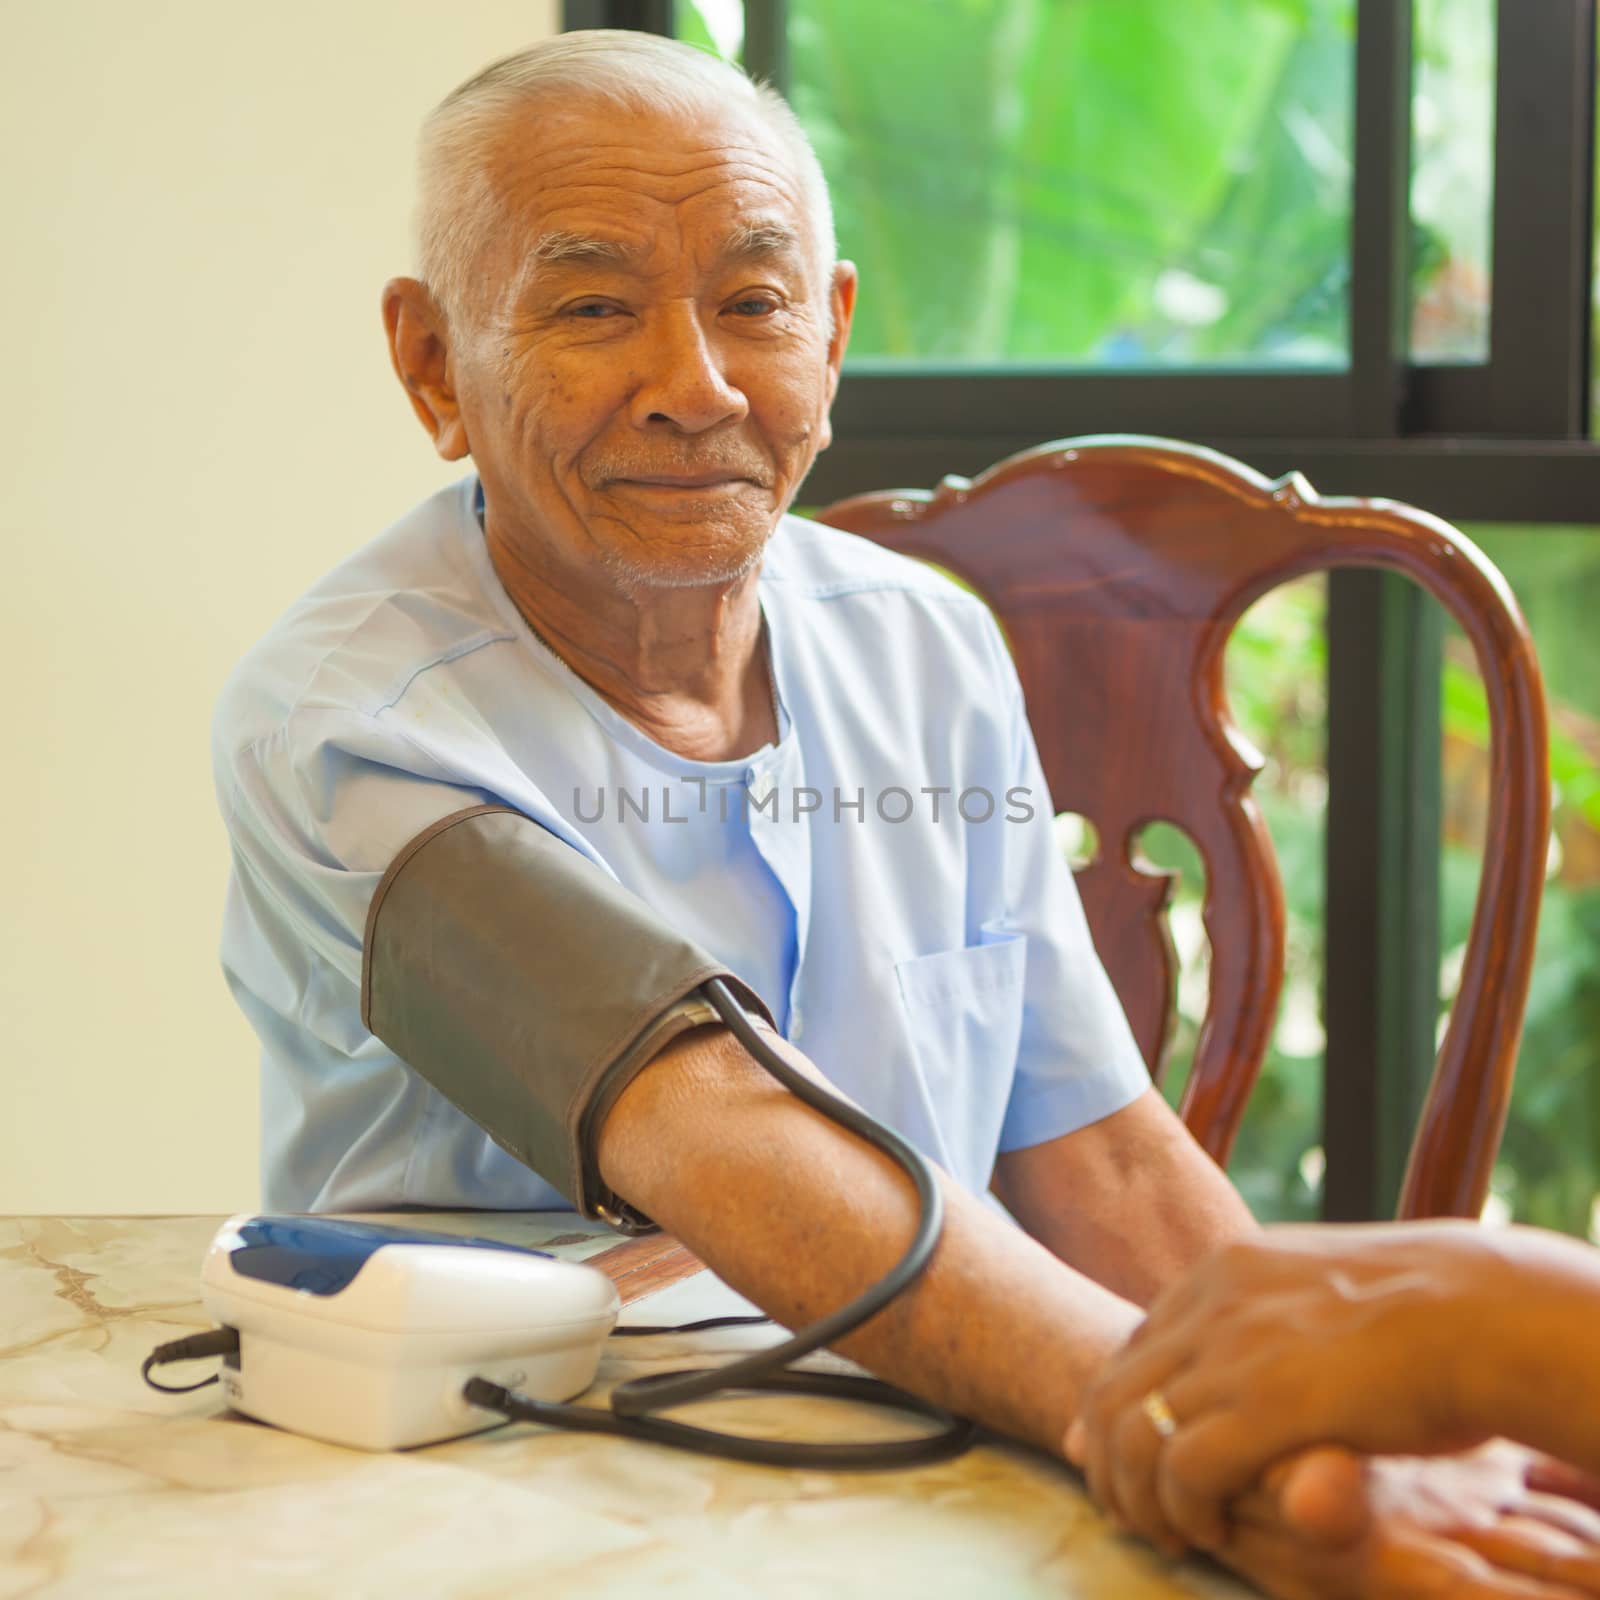 doctor measuring blood pressure of senior asian man patient